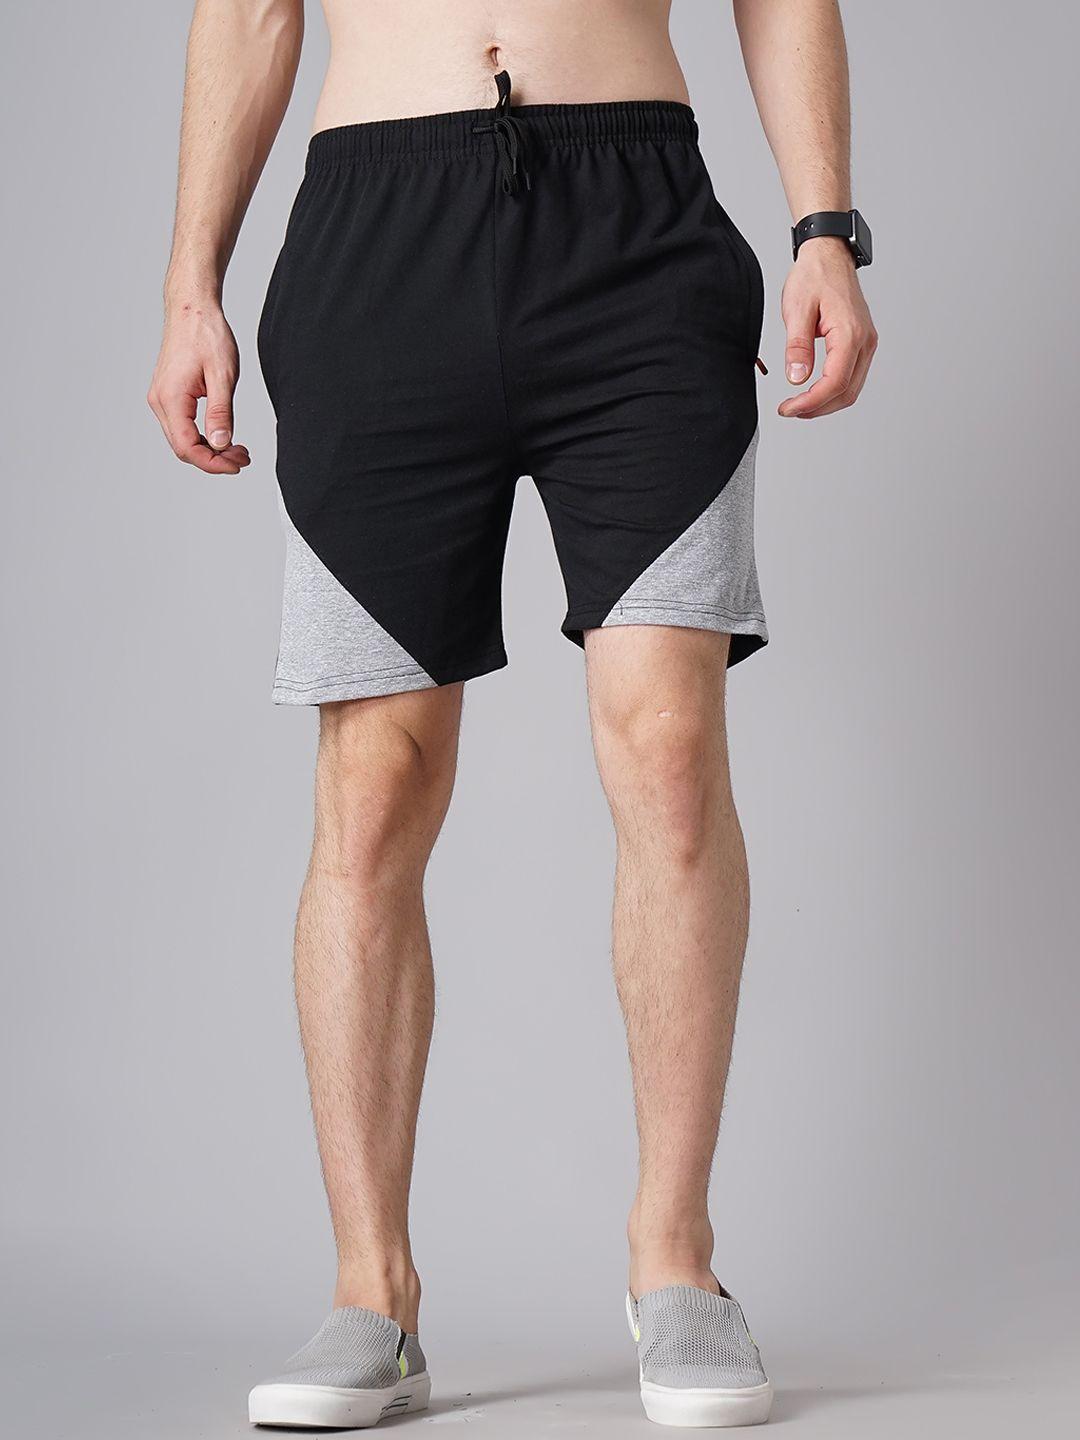 madsto-plus-size-men-slim-fit-cotton-sports-shorts